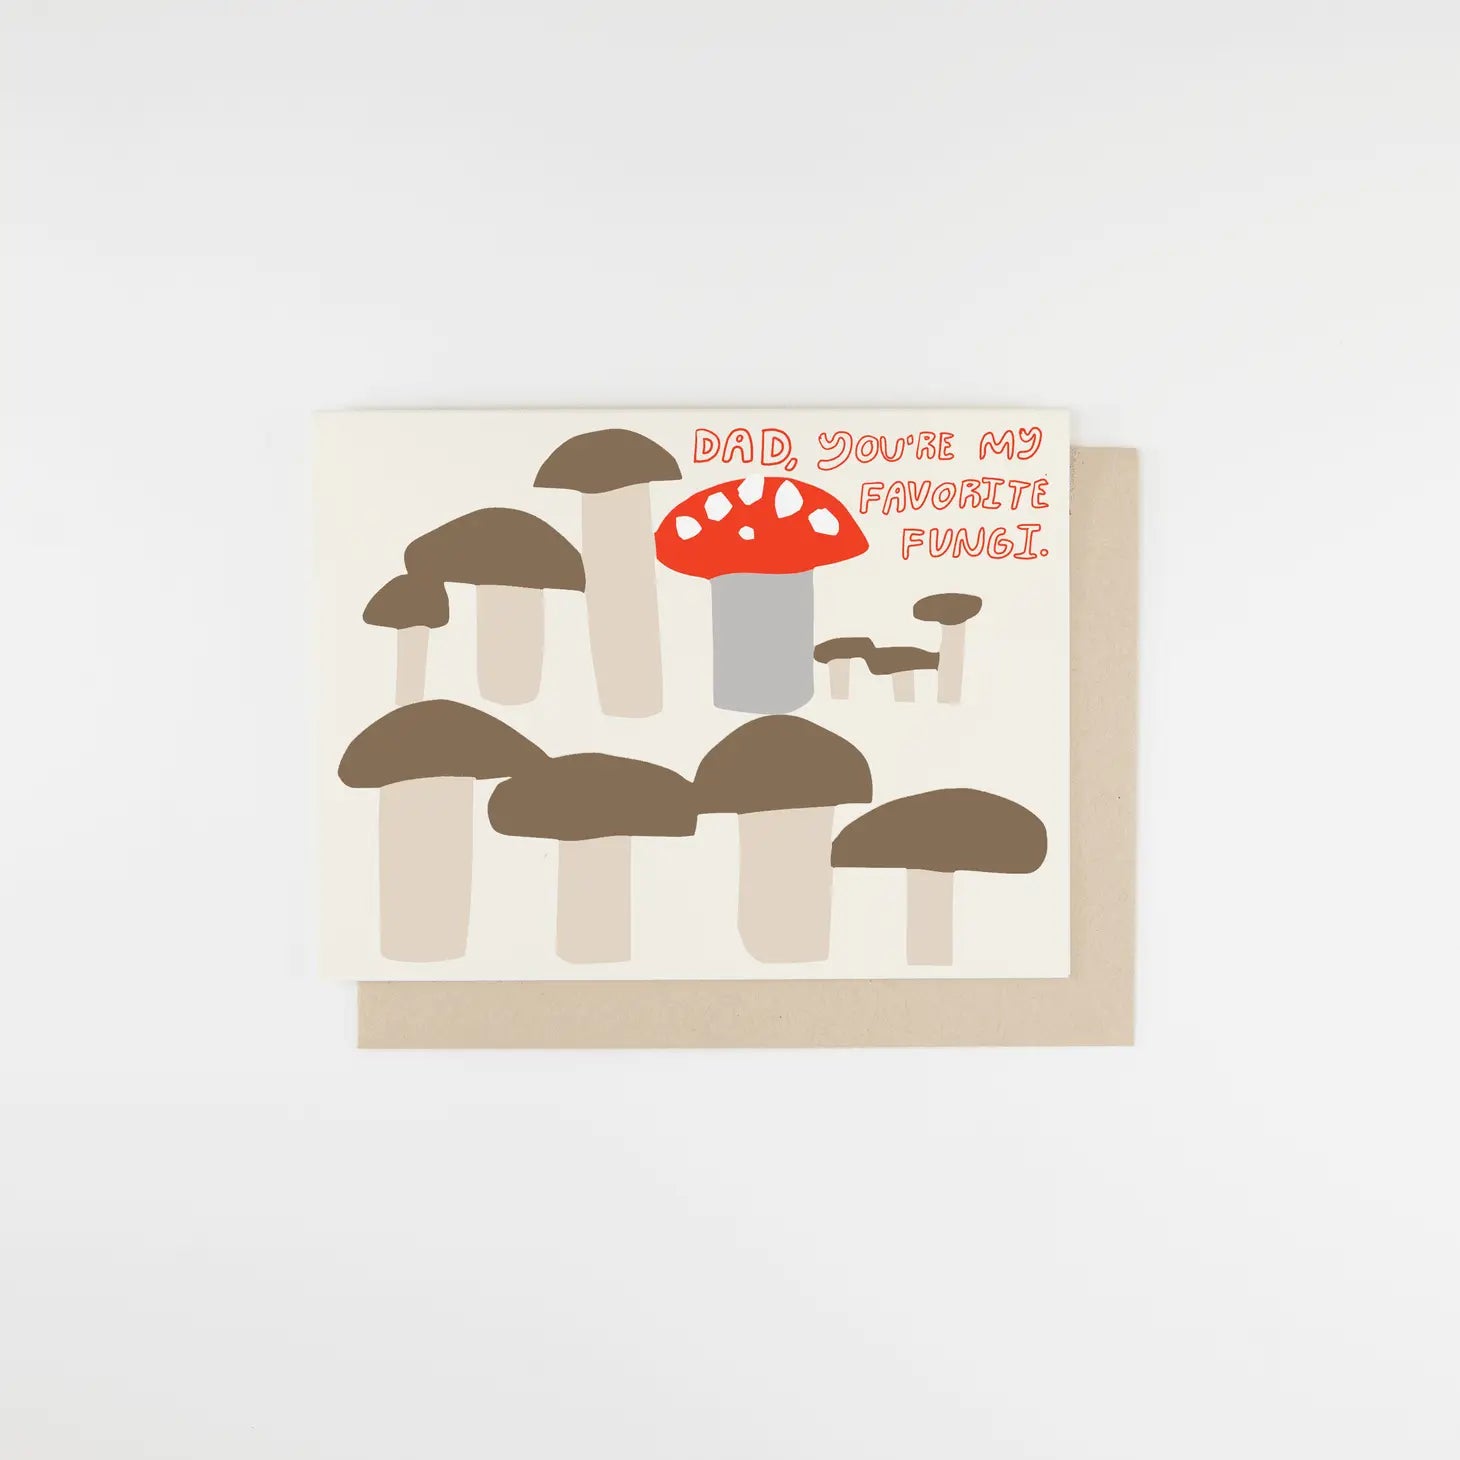 Fungi - Greeting Card